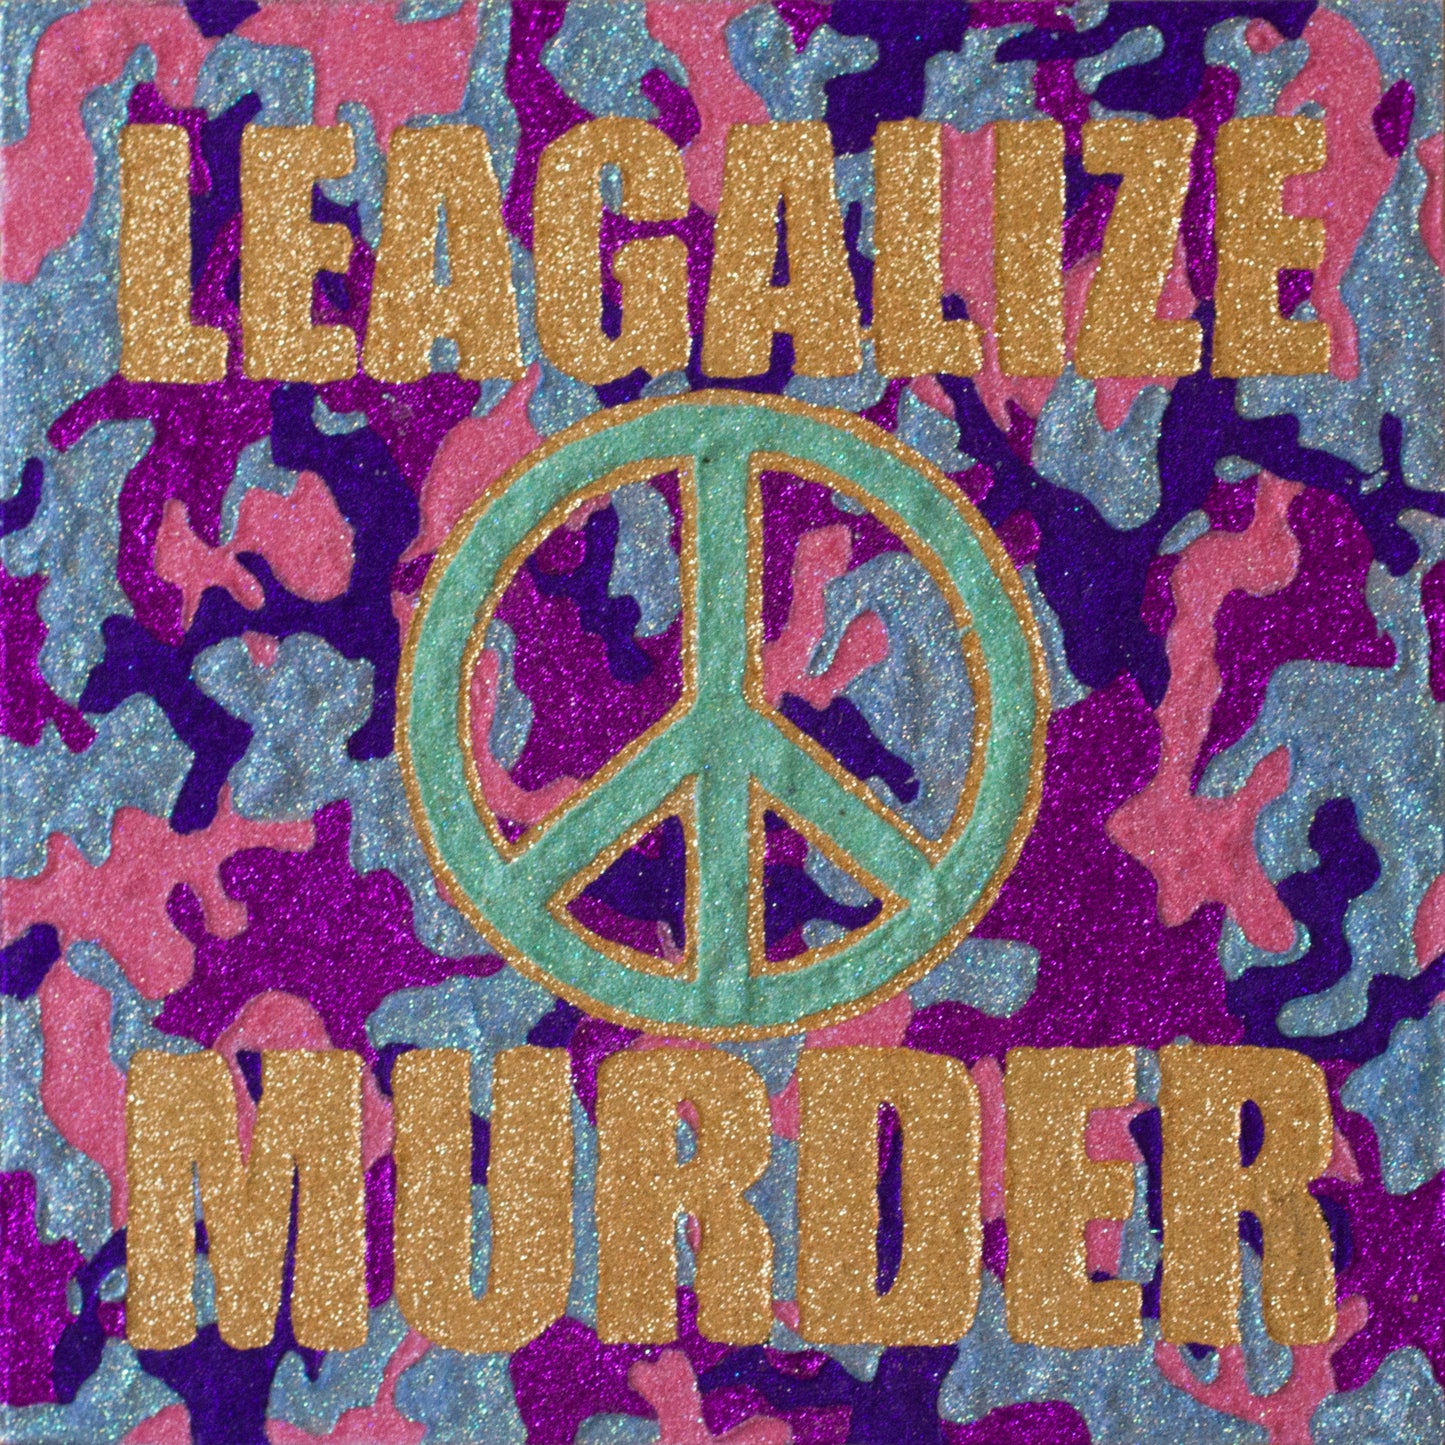 LeAgalize Murder - Eric Coolidge